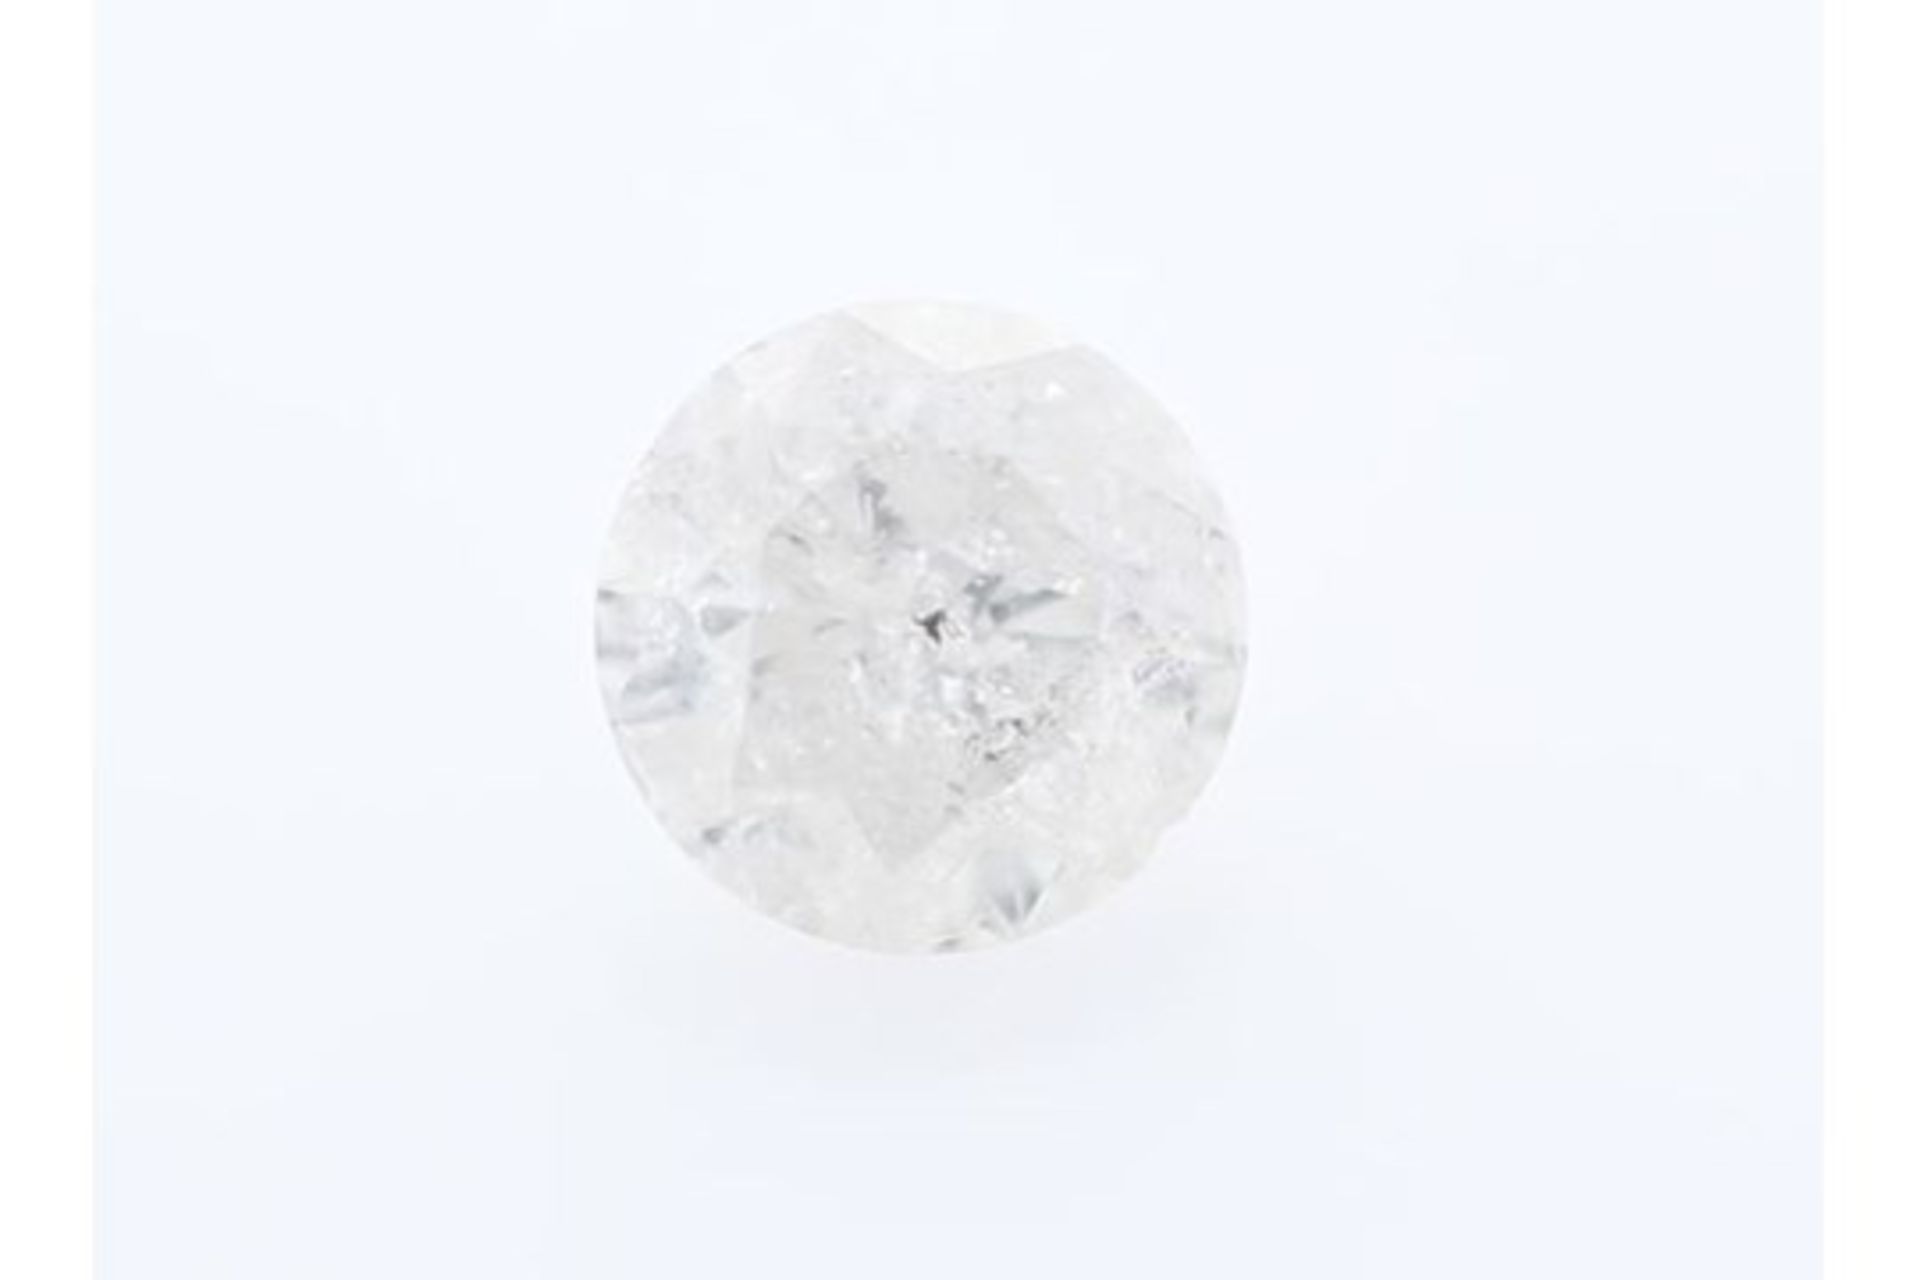 GIE Certified Loose Diamond, Carat Weight- 1.04